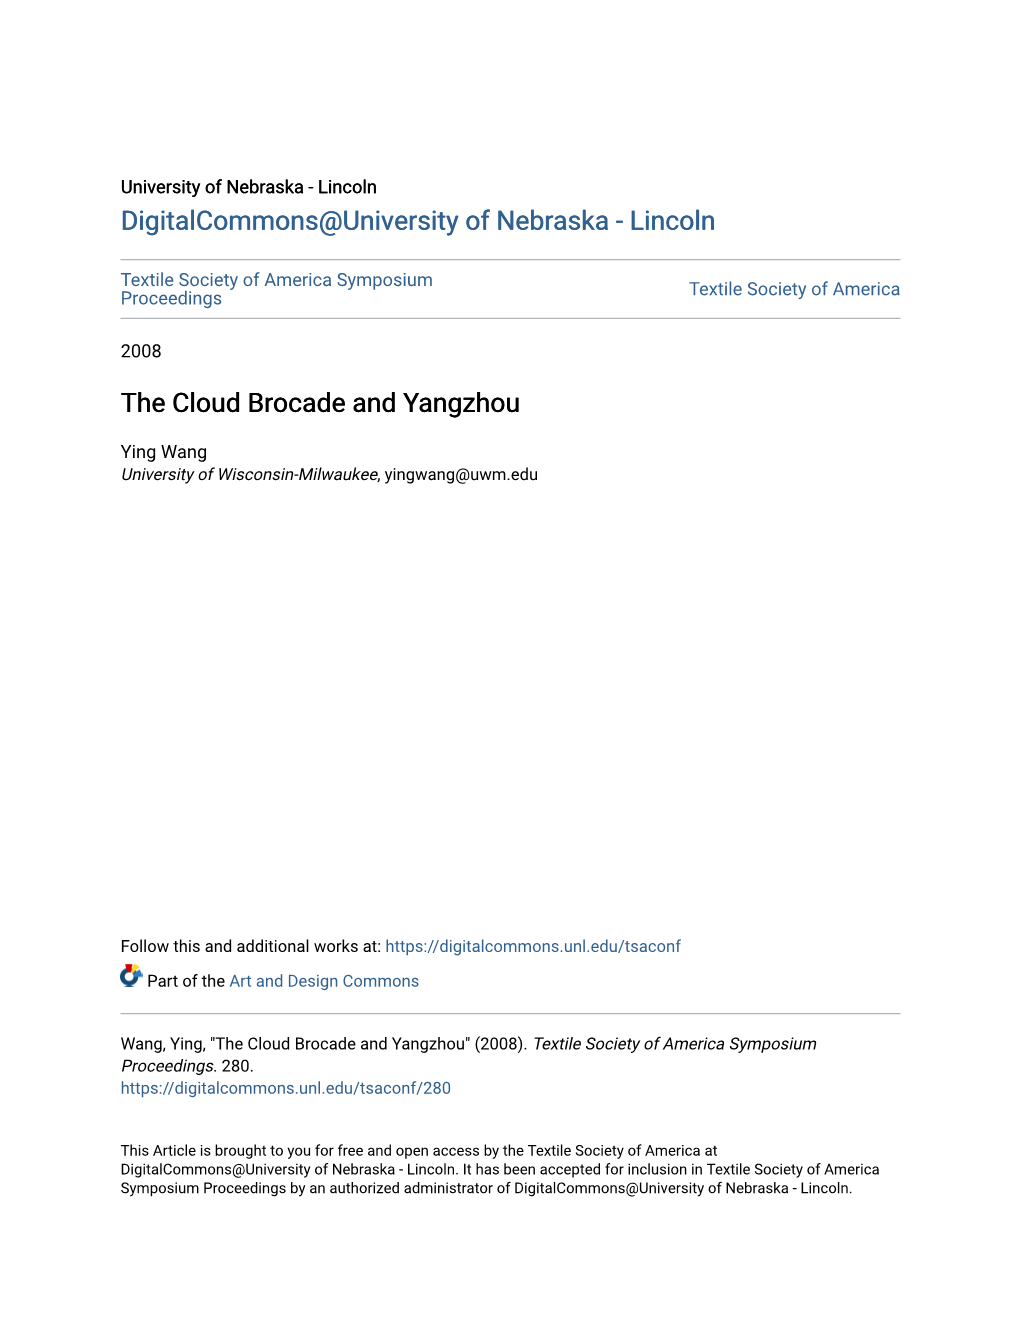 The Cloud Brocade and Yangzhou